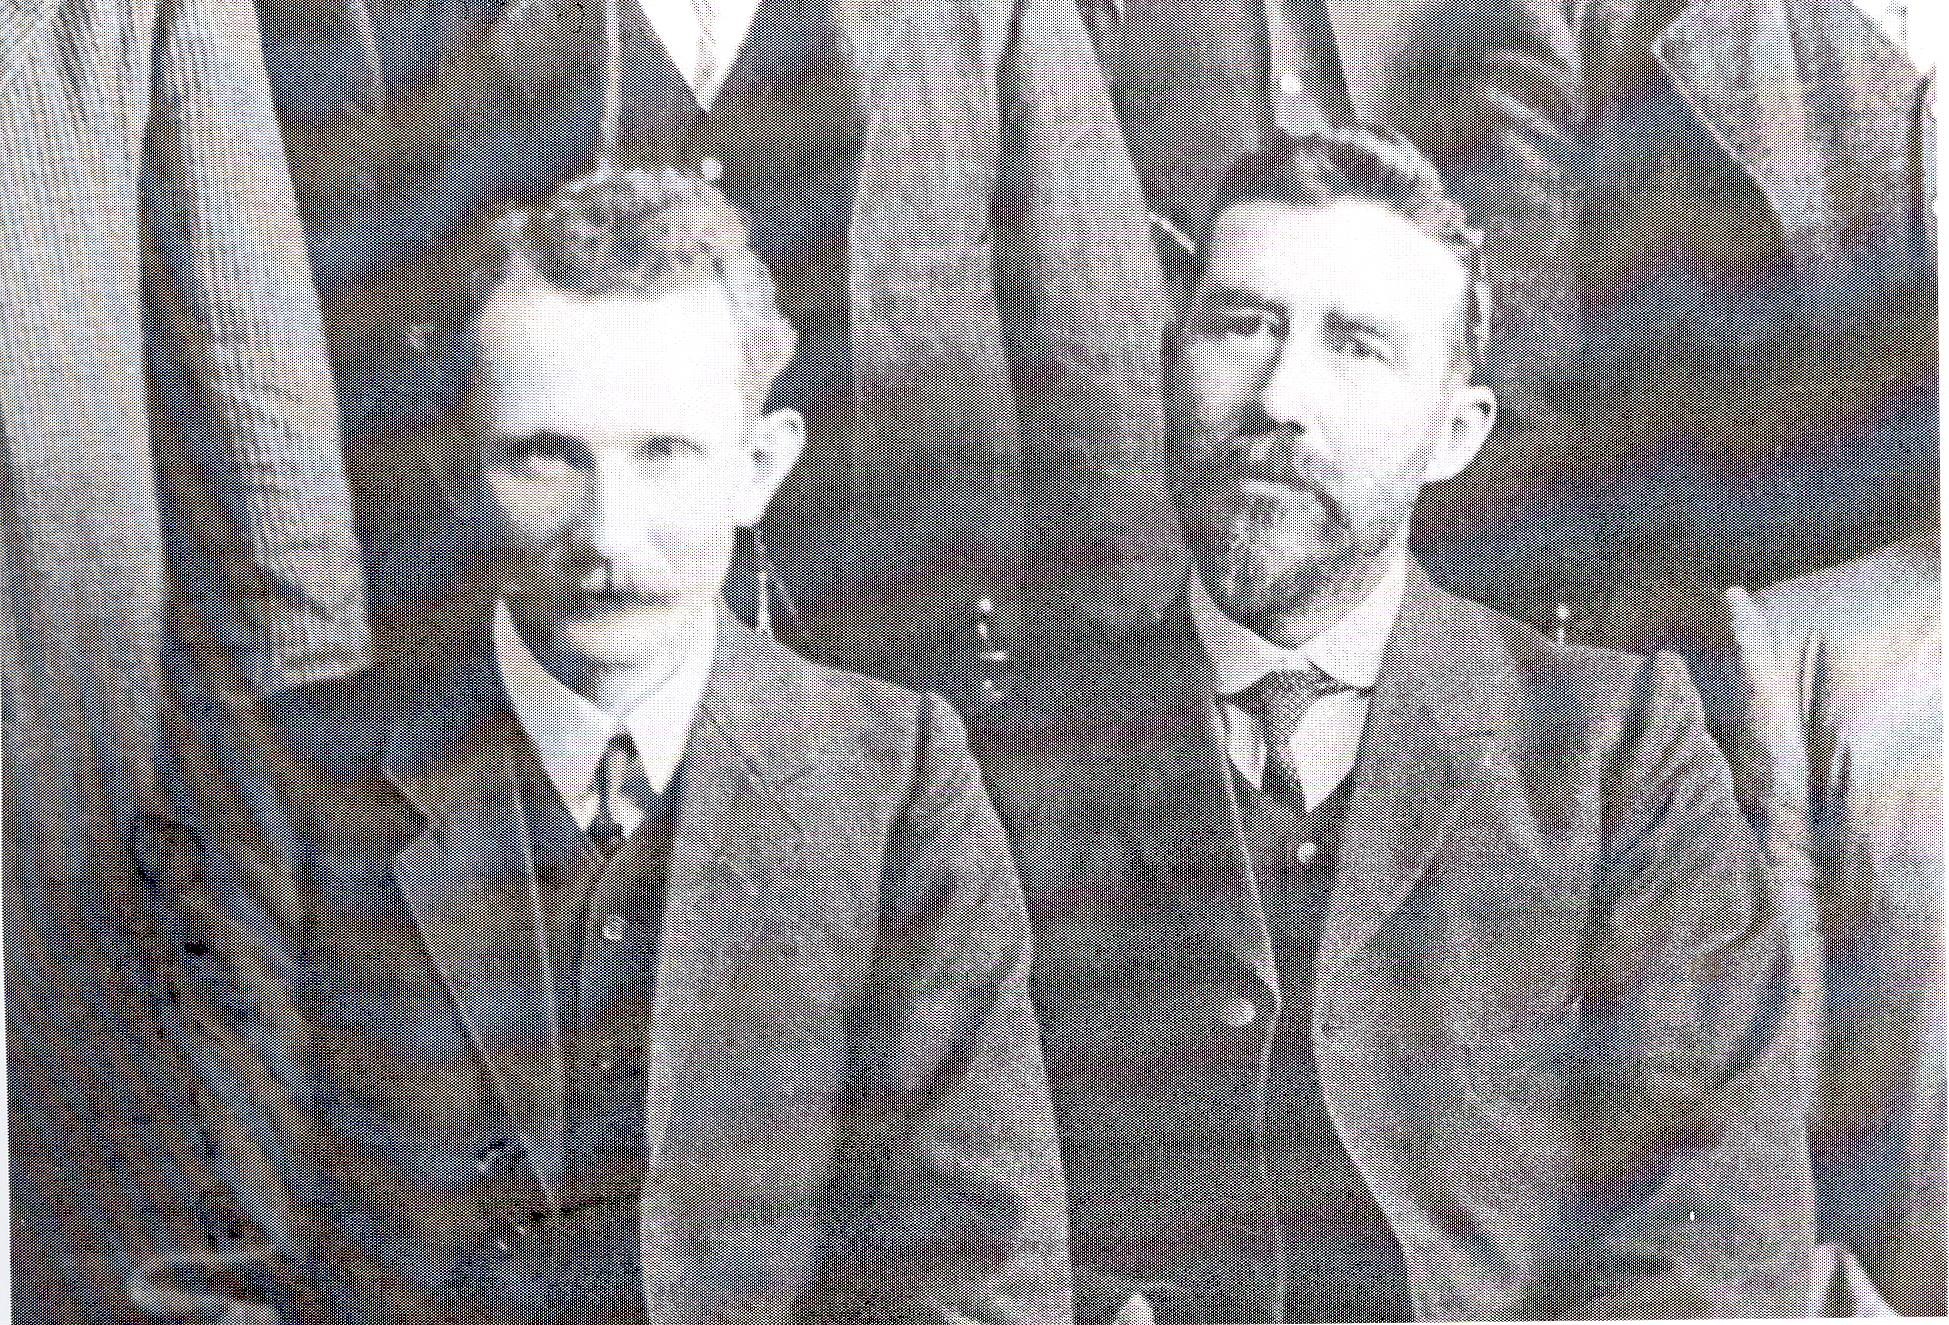 Bernard Colreavy and Stephen Grace